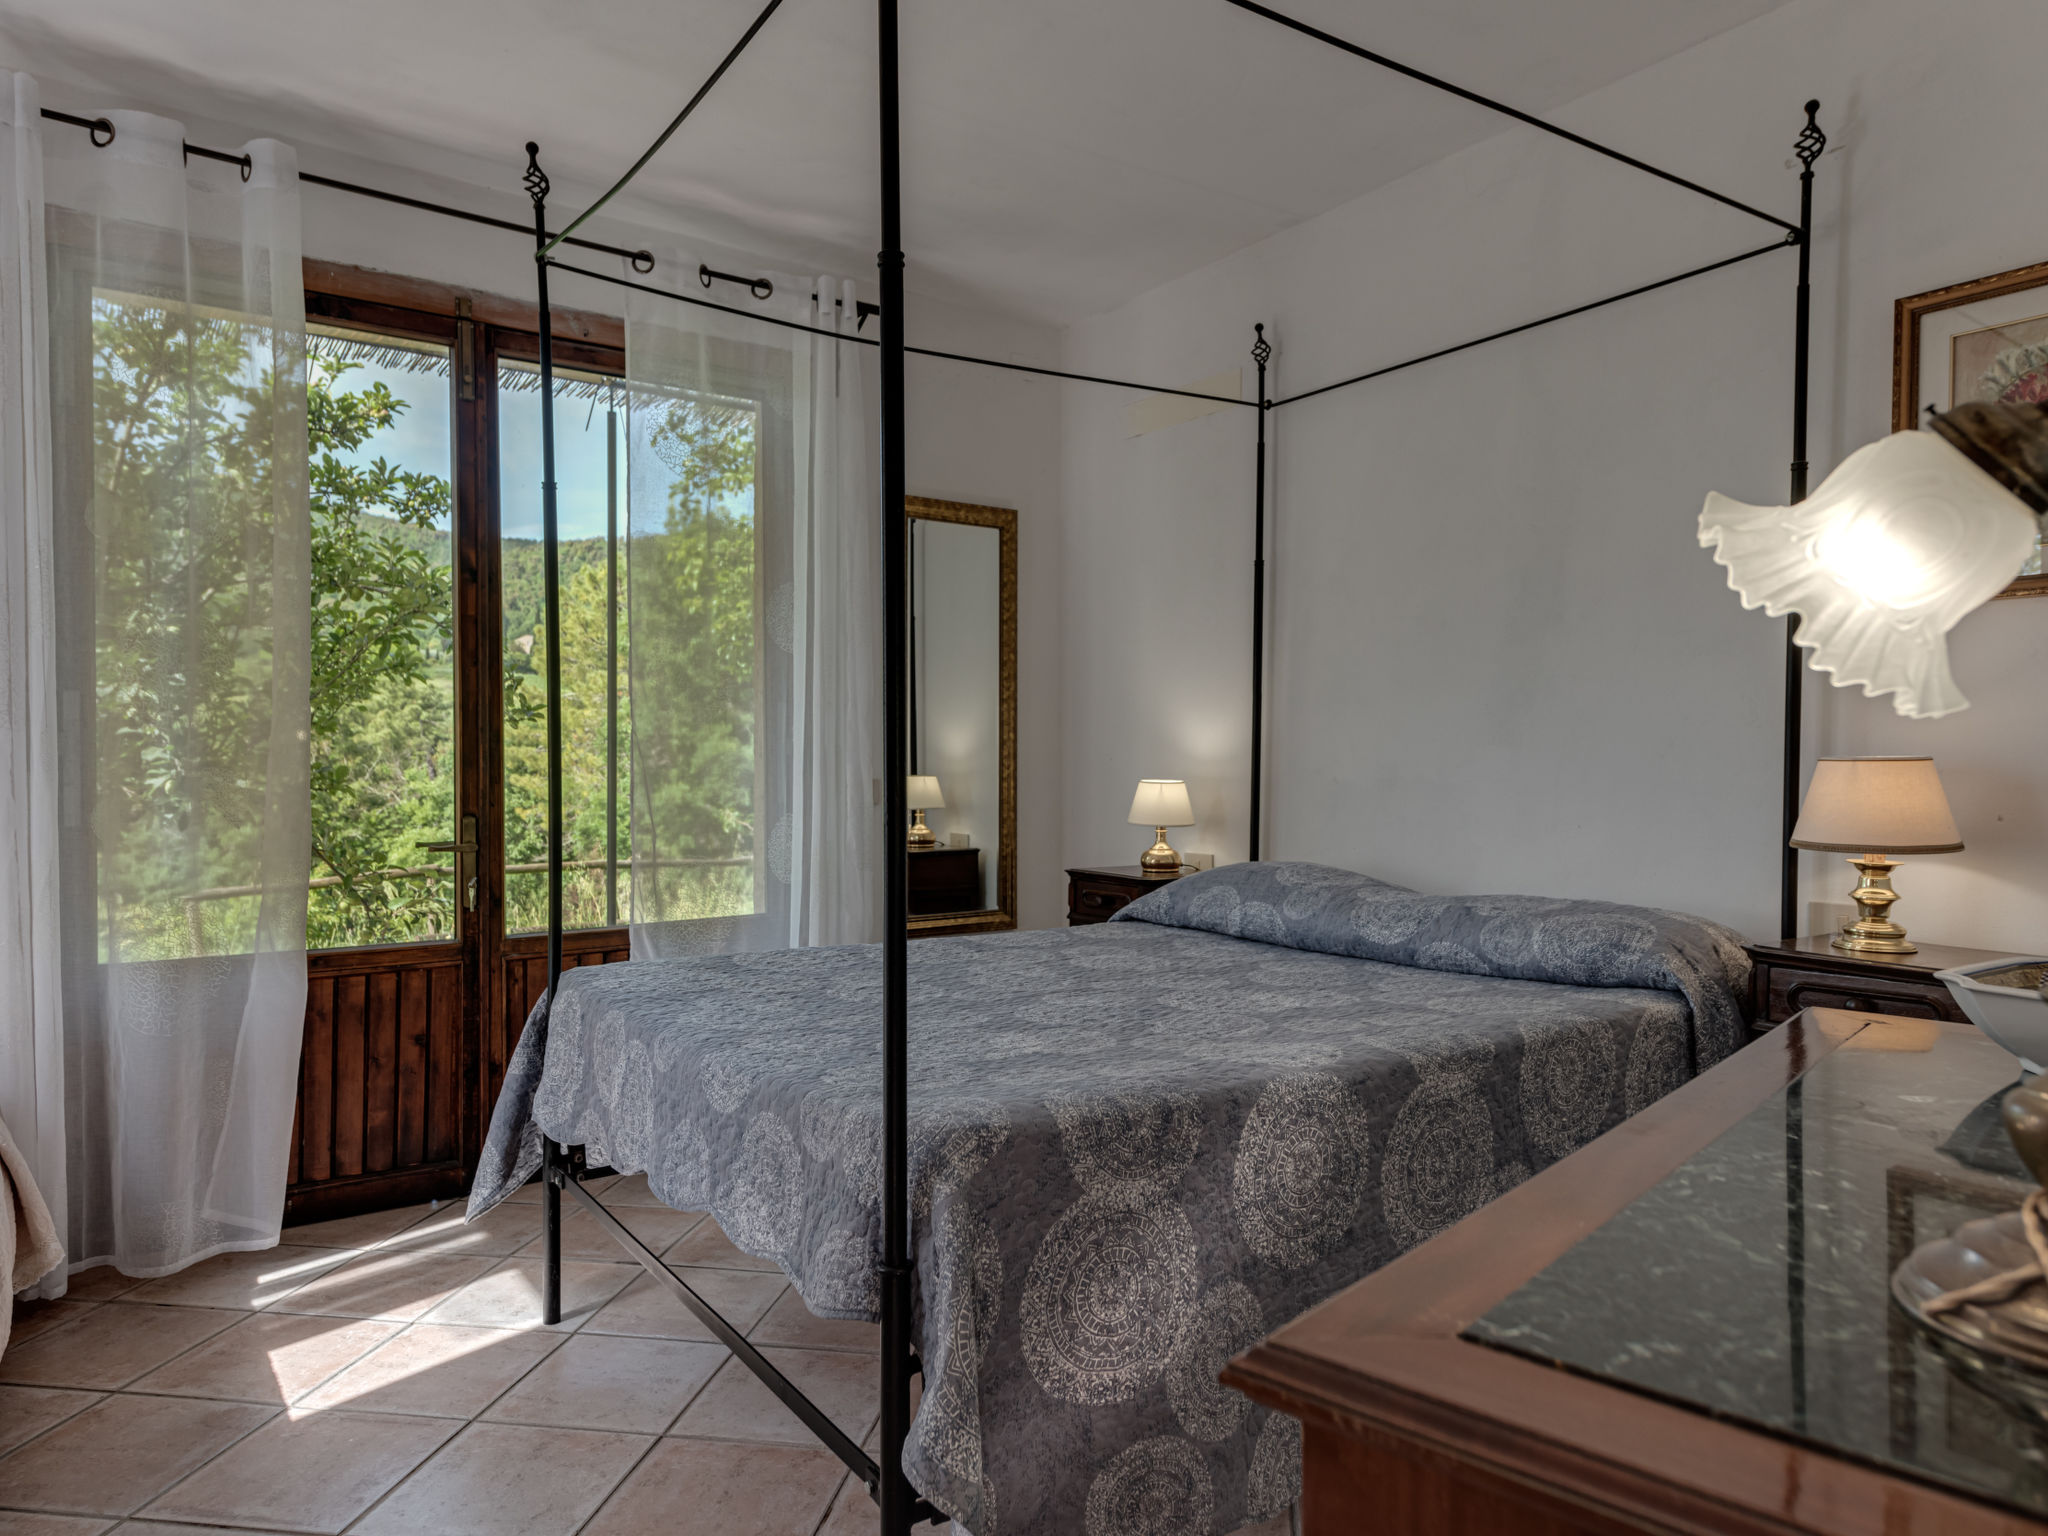 Foto 46 - Casa con 4 camere da letto a San Gimignano con piscina e giardino